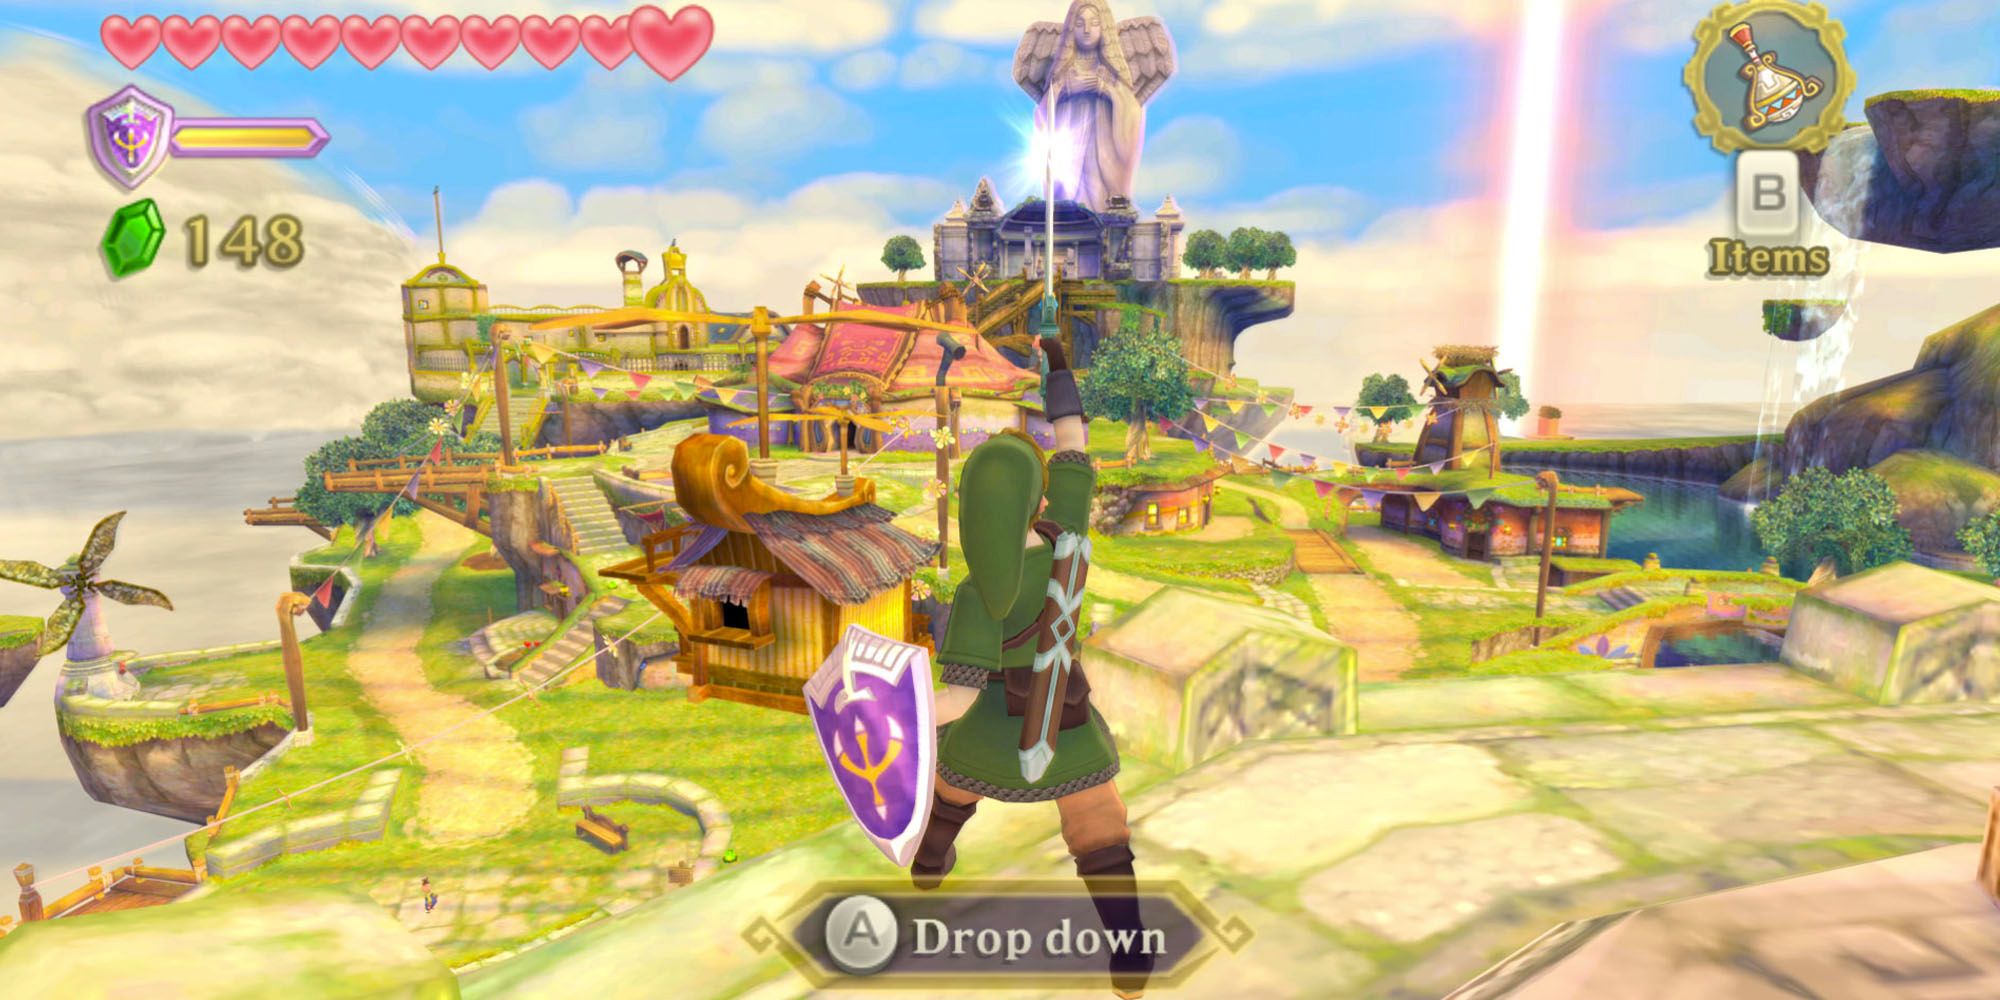 The Legend of Zelda: Skyward Sword HD - 30 mins of Nintendo Switch Gameplay  (Intro) 